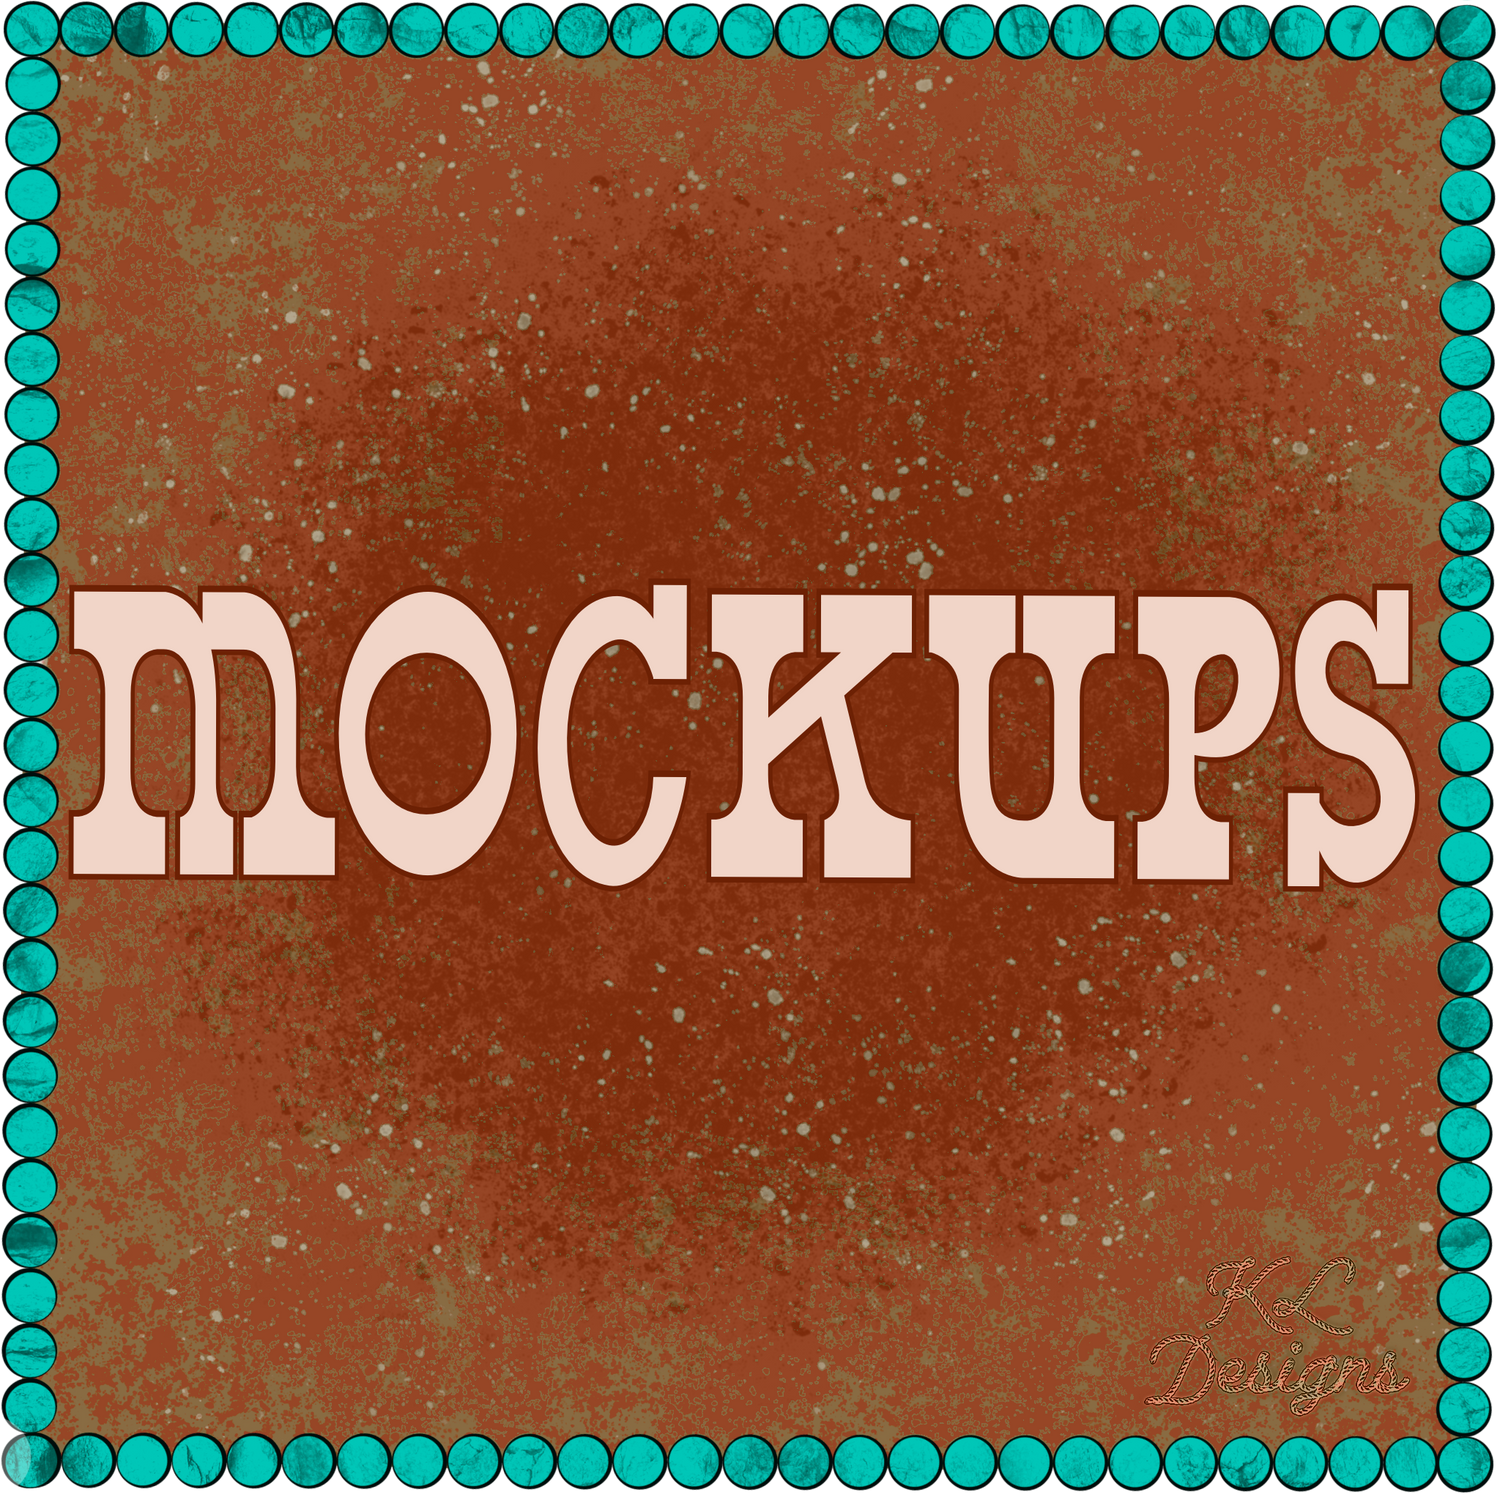 Mockups